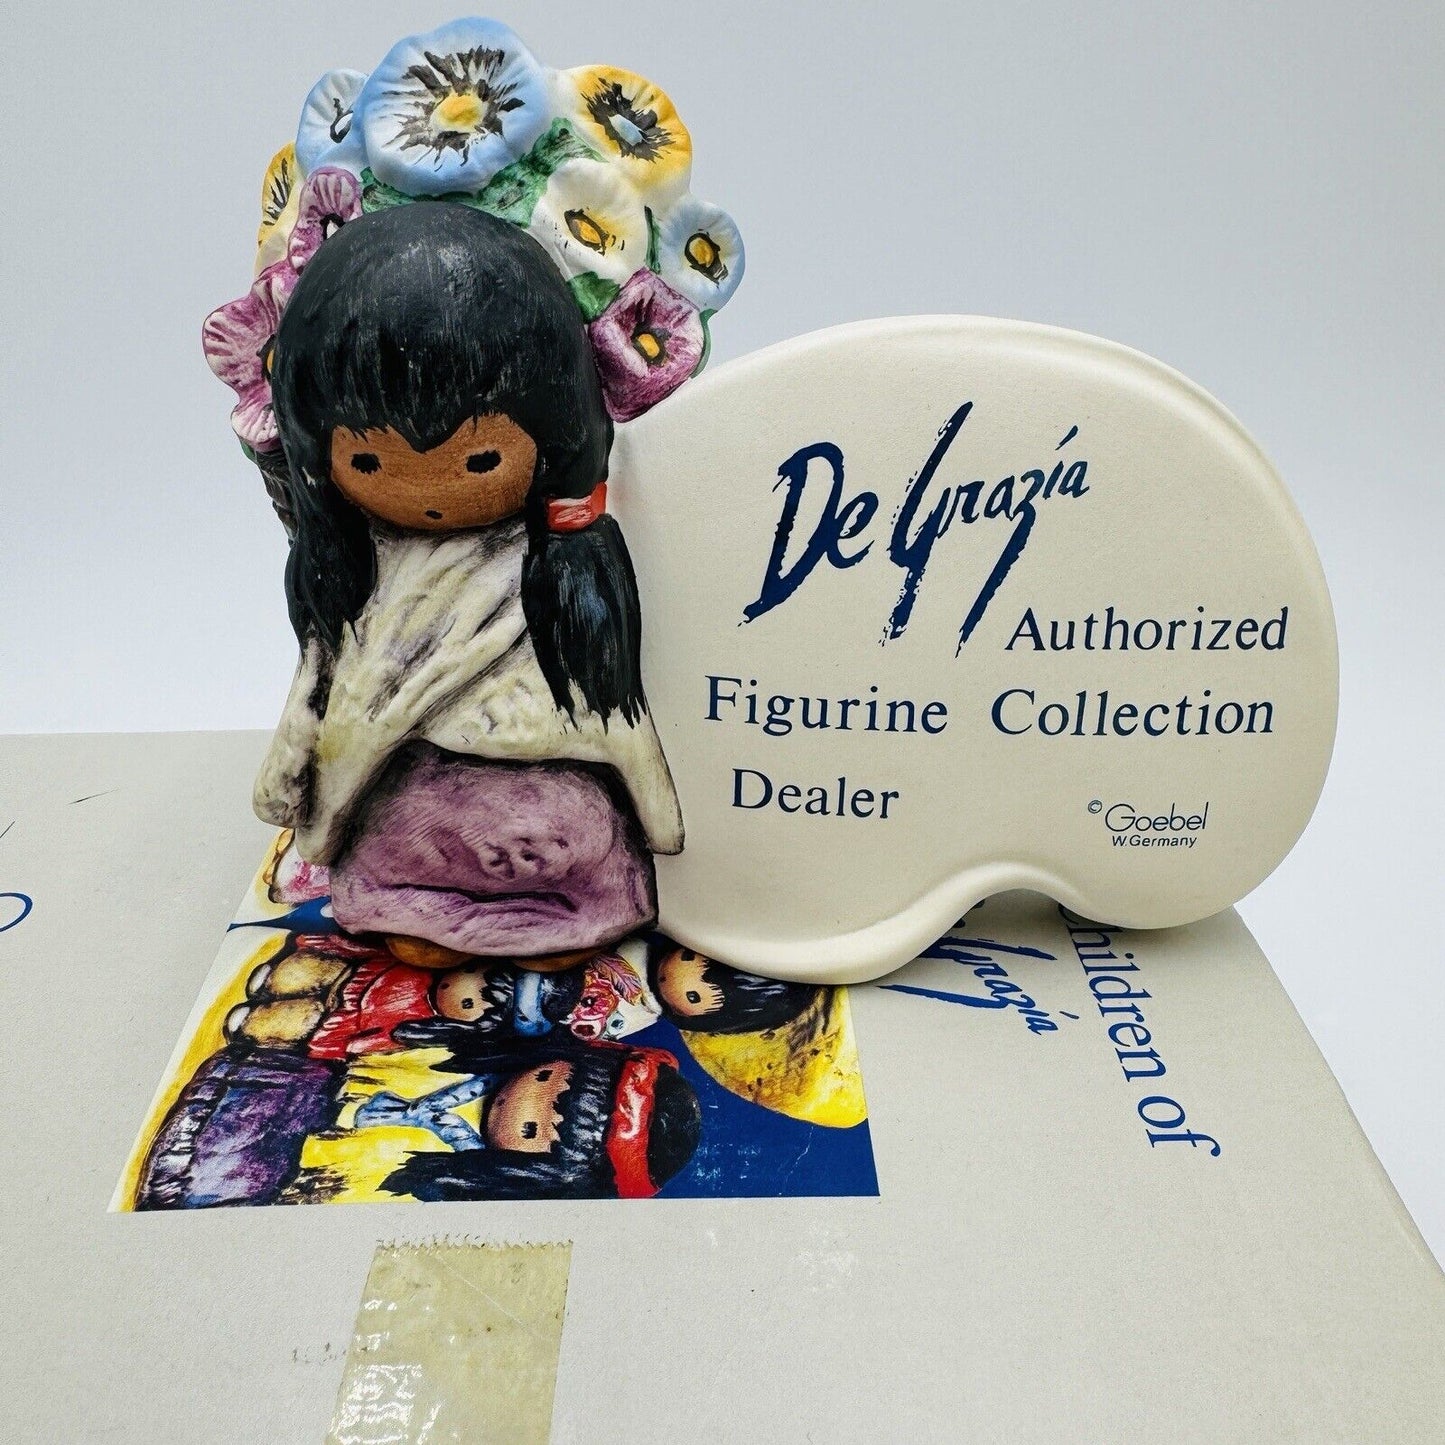 Goebel DeGrazia Signed Dealer Plaque Flower Girl Figurine w/ Box Painted